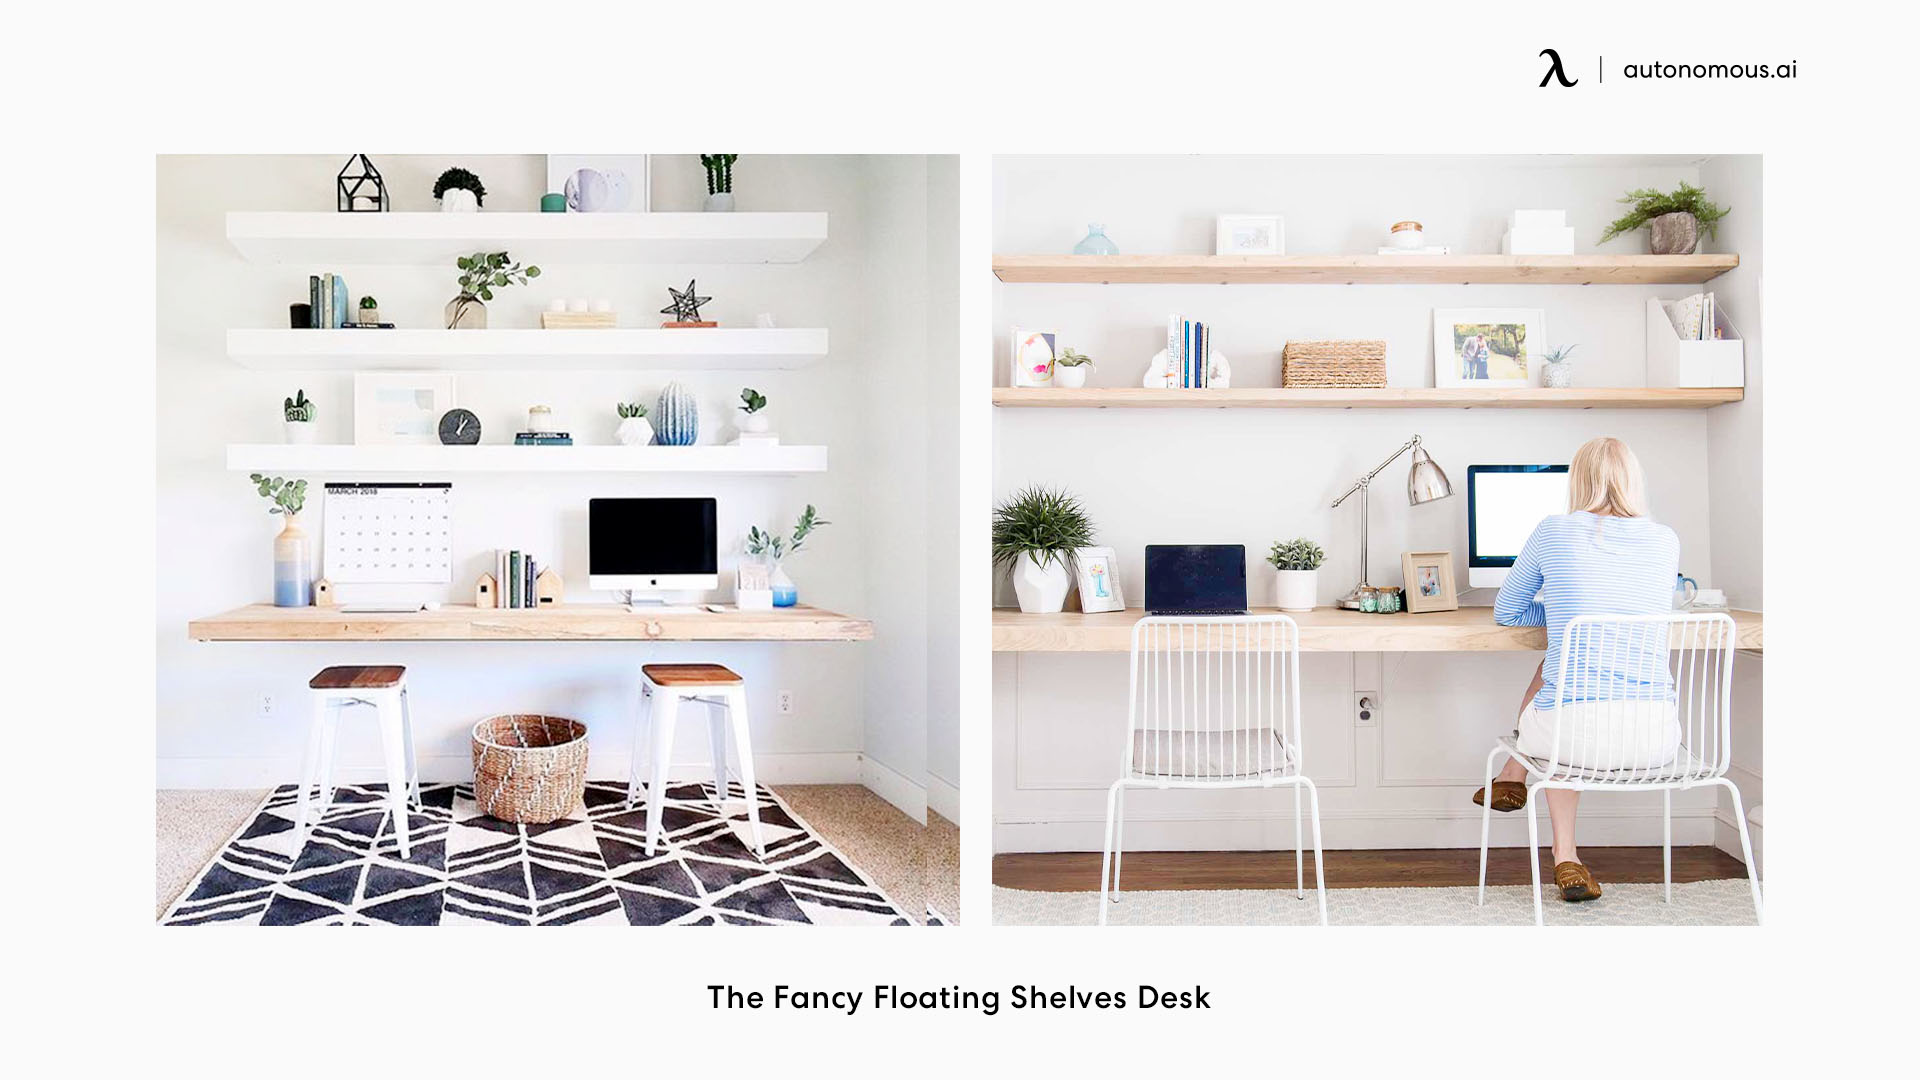 The Fancy Floating Shelves Desk